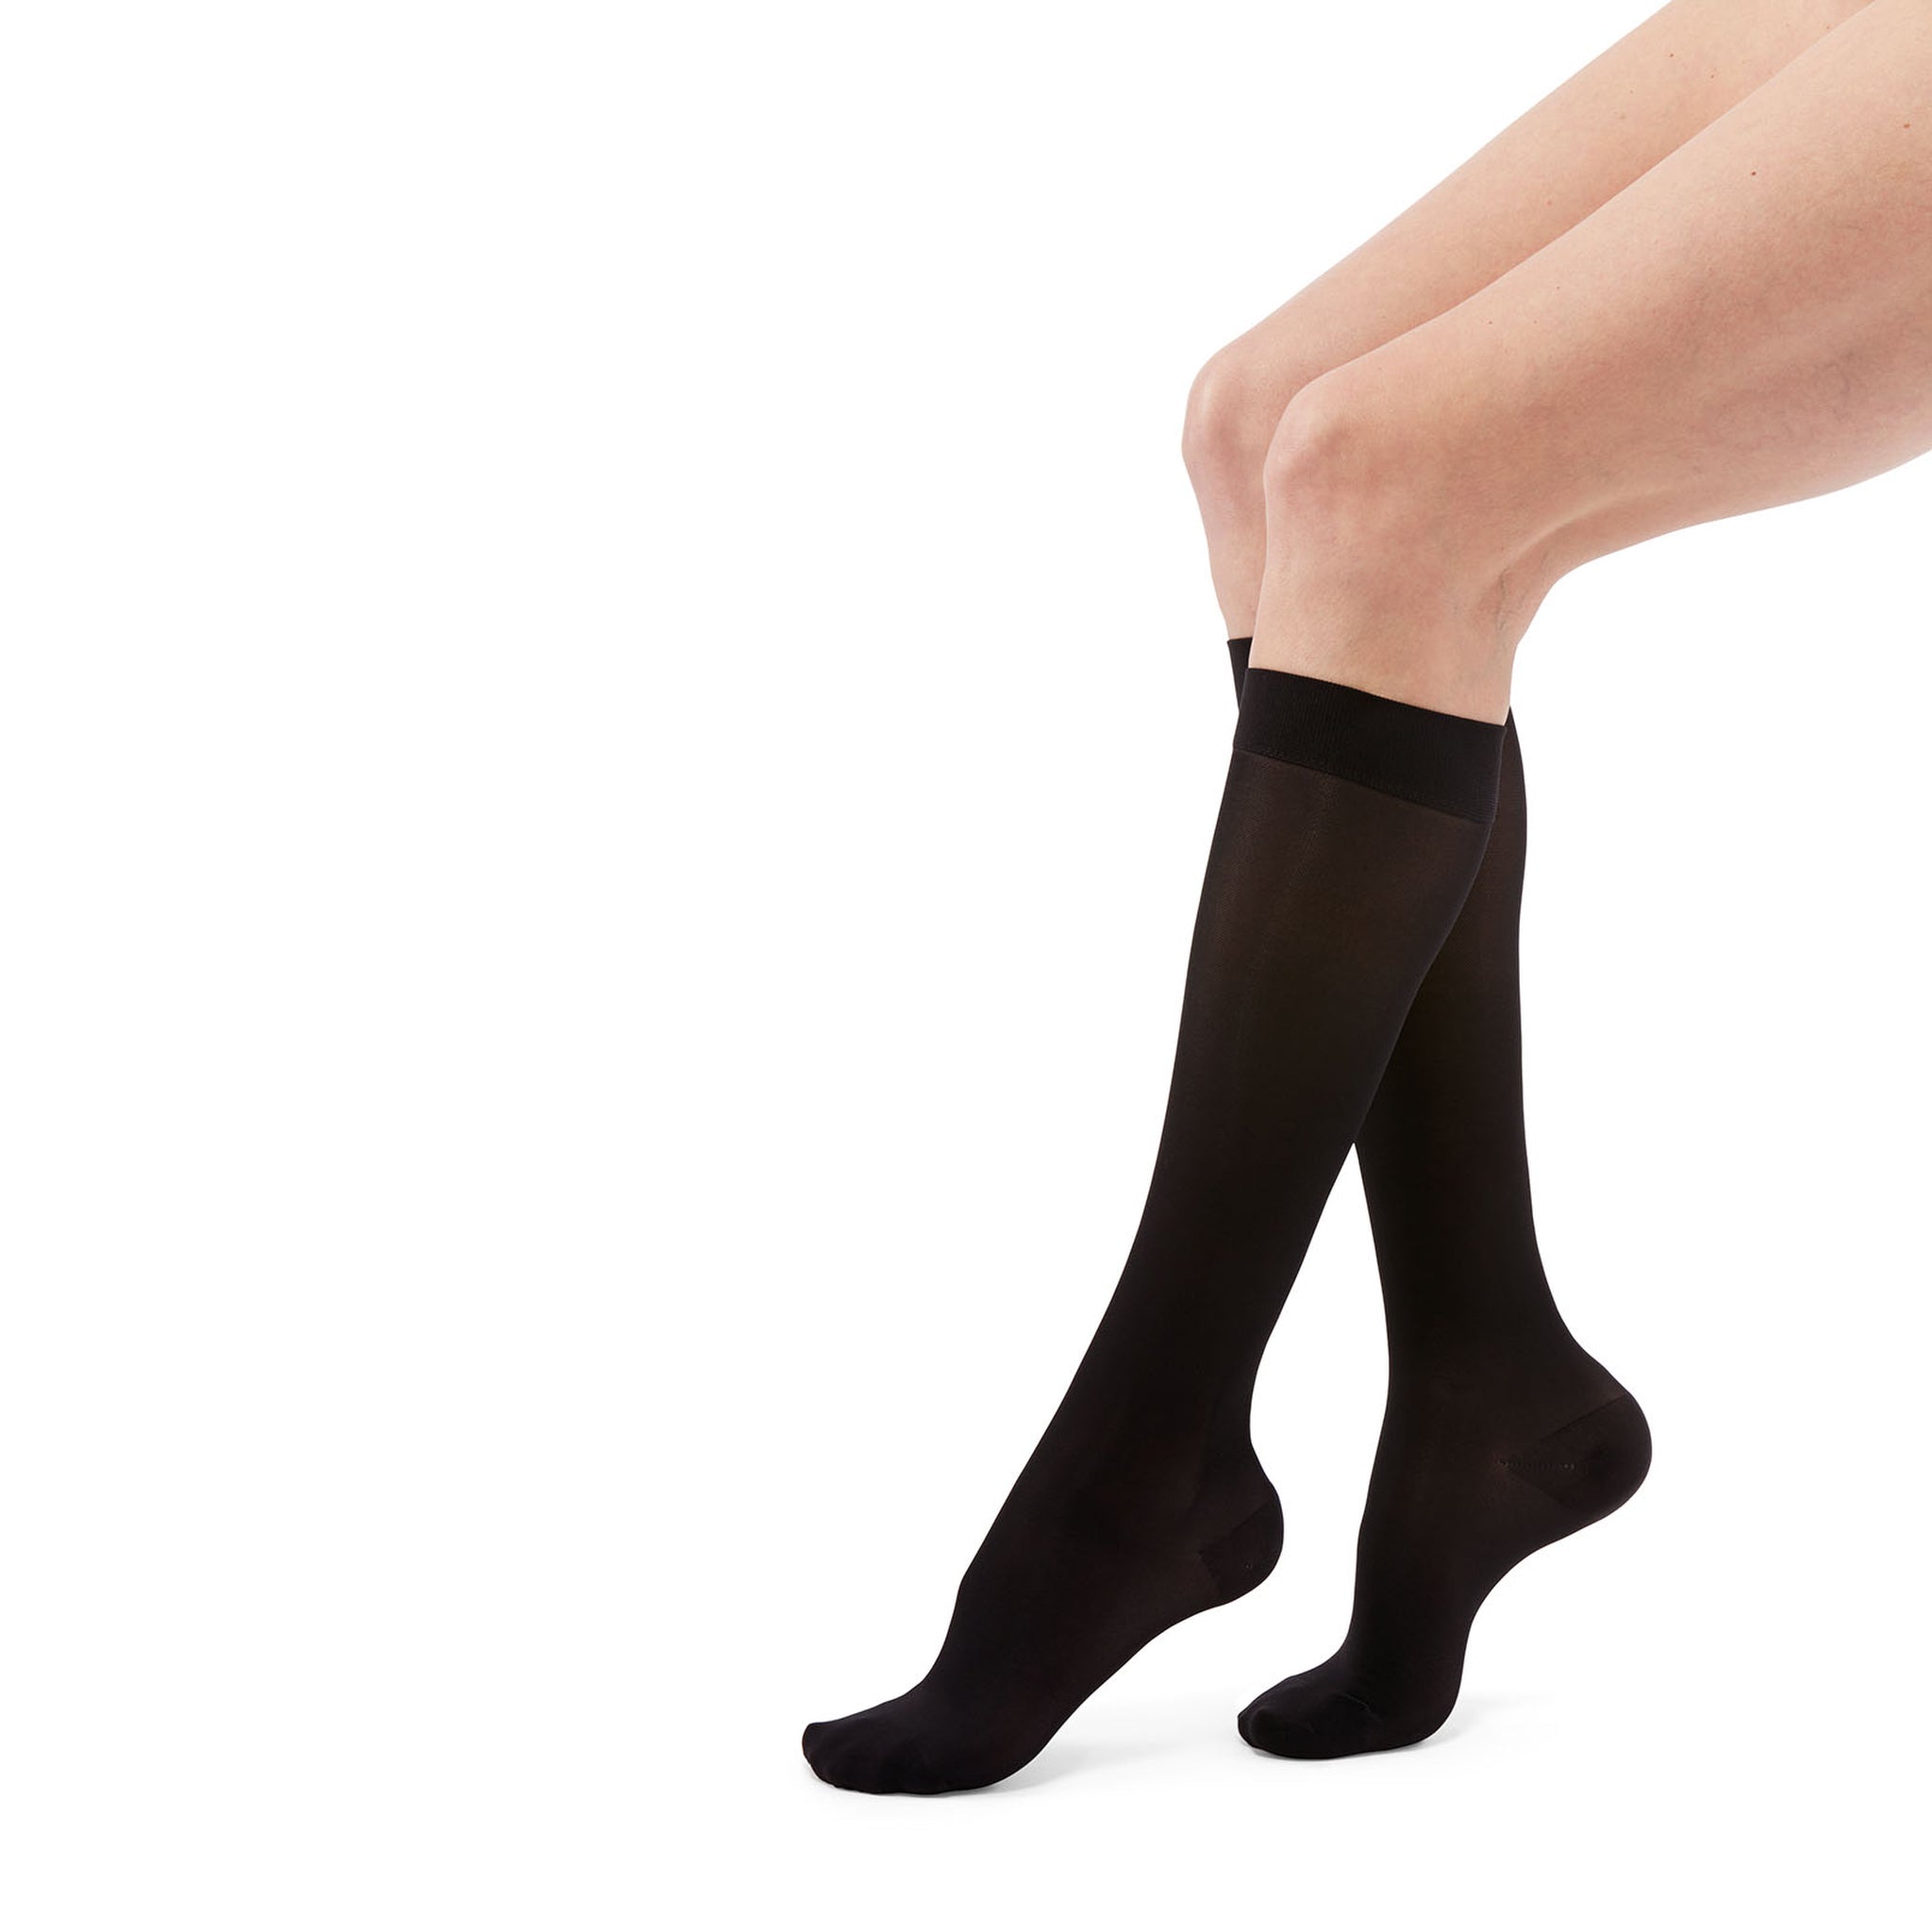 Cvs Compression Stockingscompression Knee-high Stockings For Varicose  Veins - Nylon Legwarmers 18-21mm